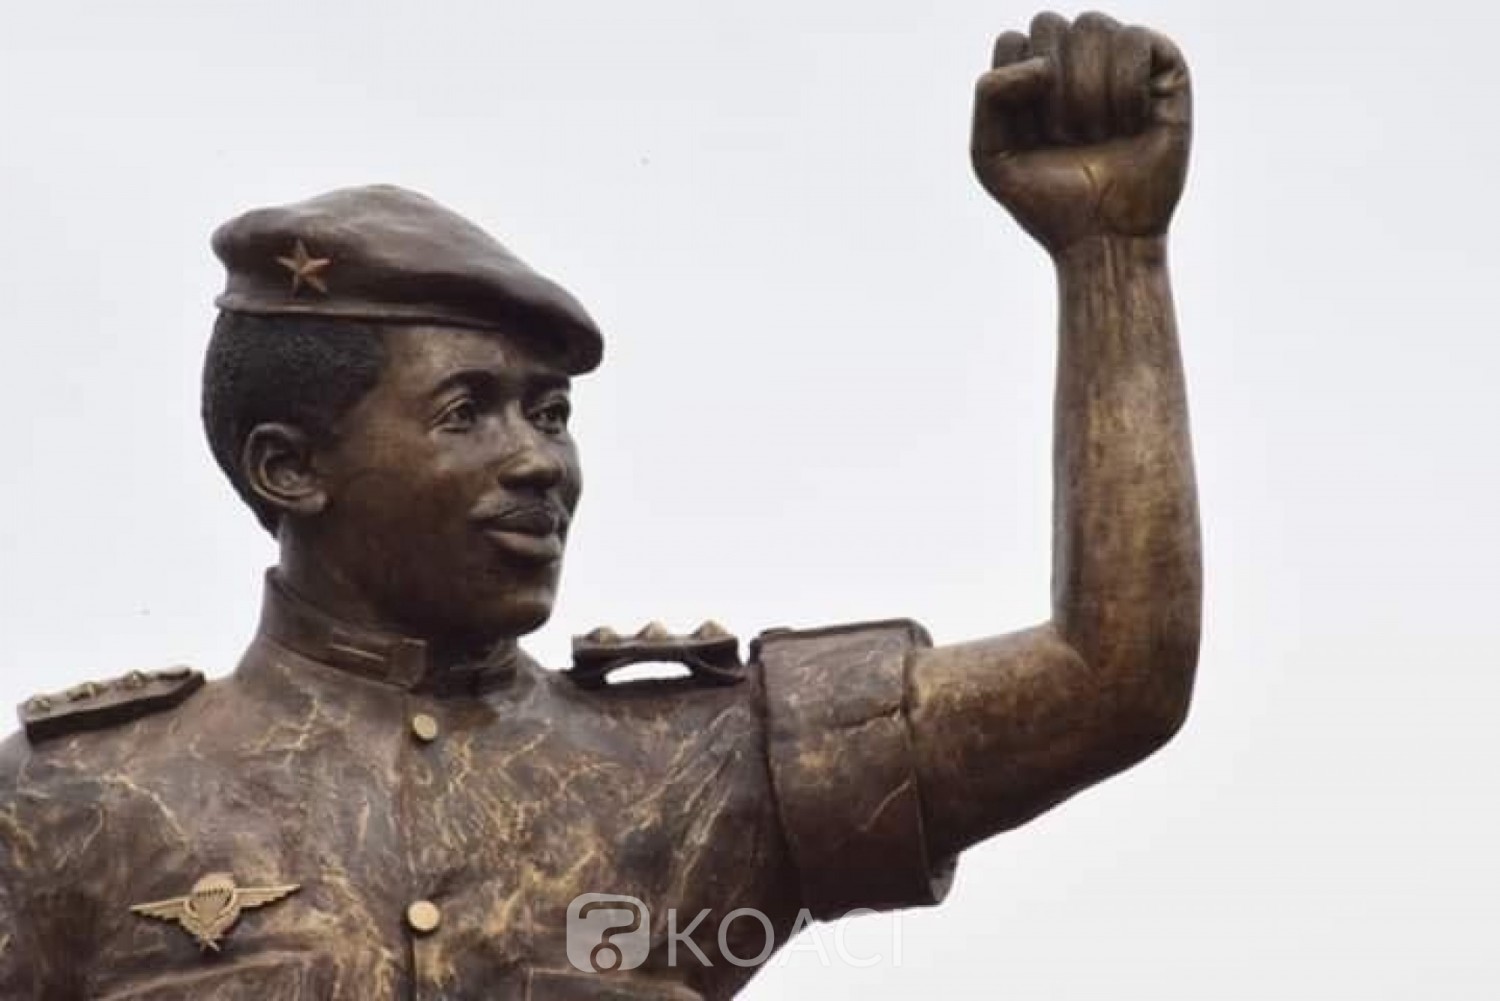 Burkina Faso : La statue de Sankara dévoilée après des modifications